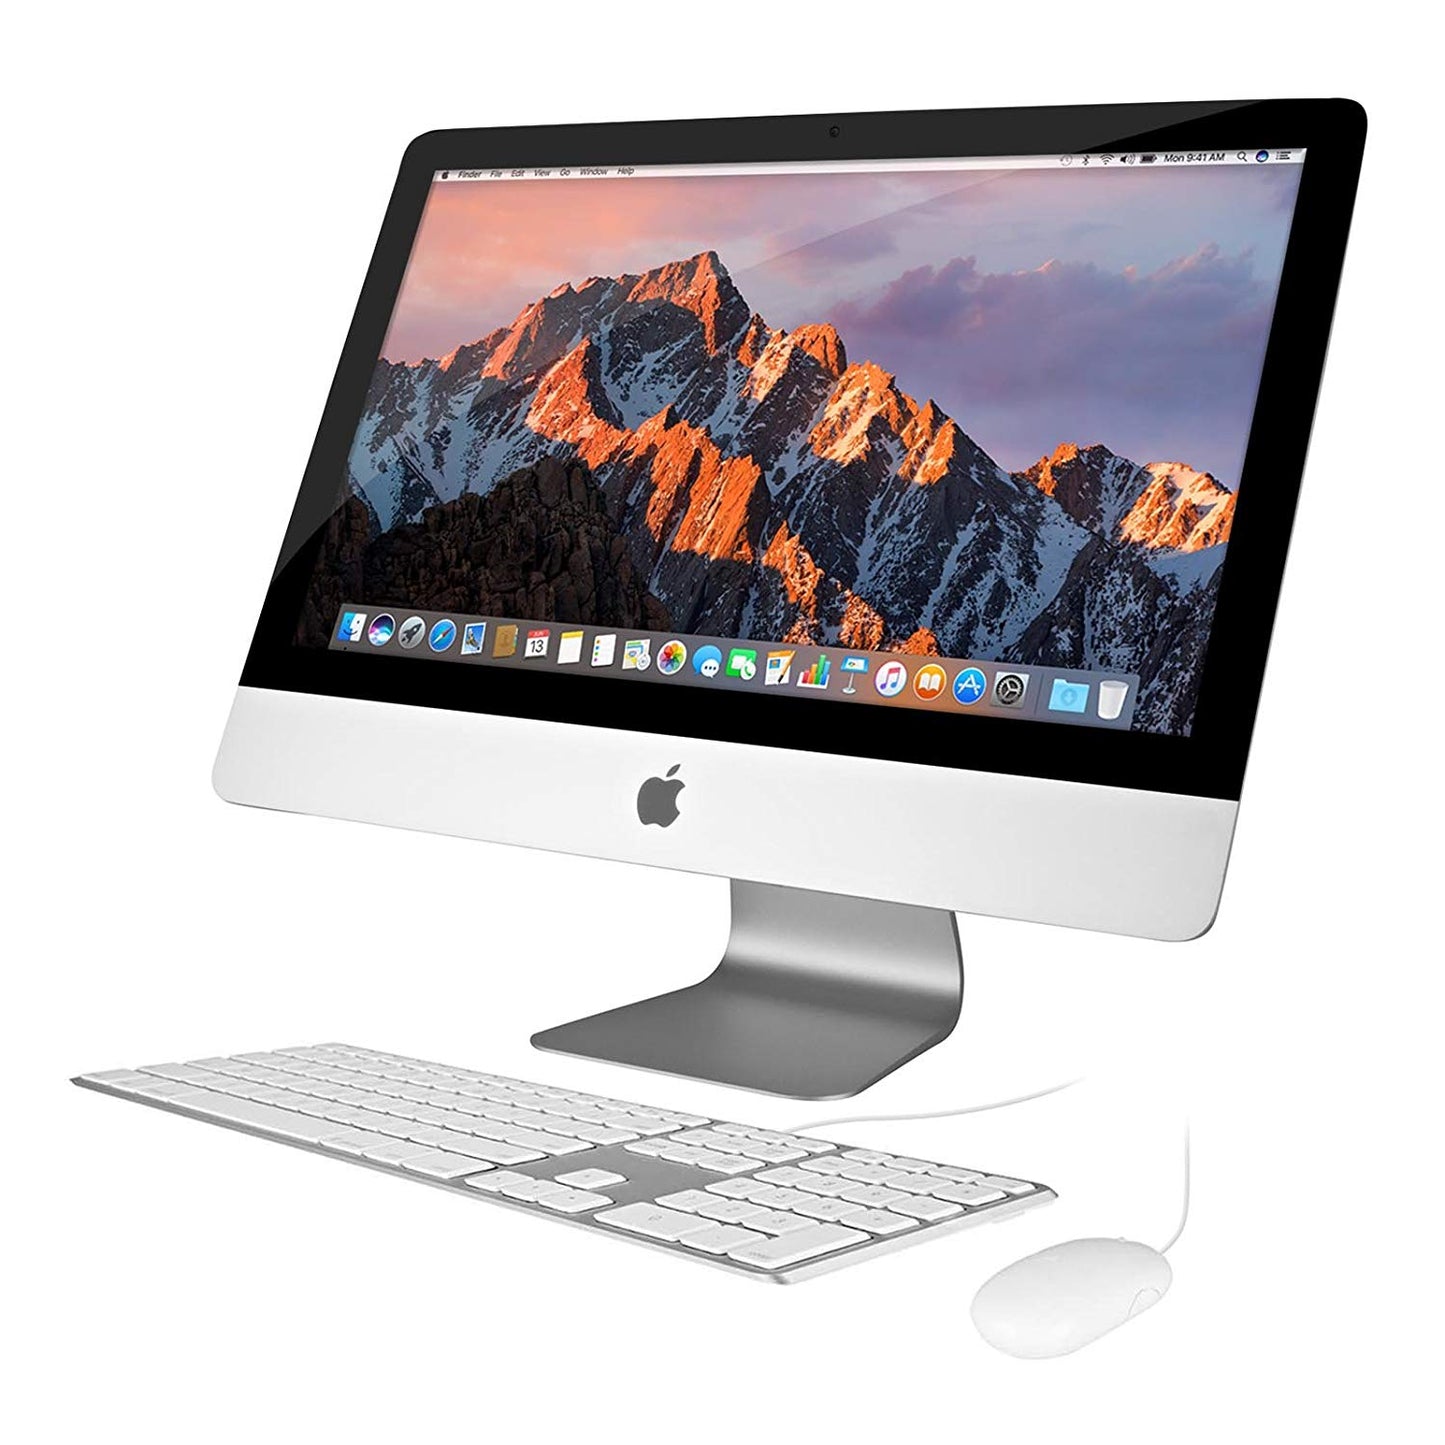 Apple iMac 21.5in 2.7GHz Core i5 (ME086LL/A) All In One Desktop, 8GB Memory, 1TB Hard Drive, MacOS 10.12 Sierra